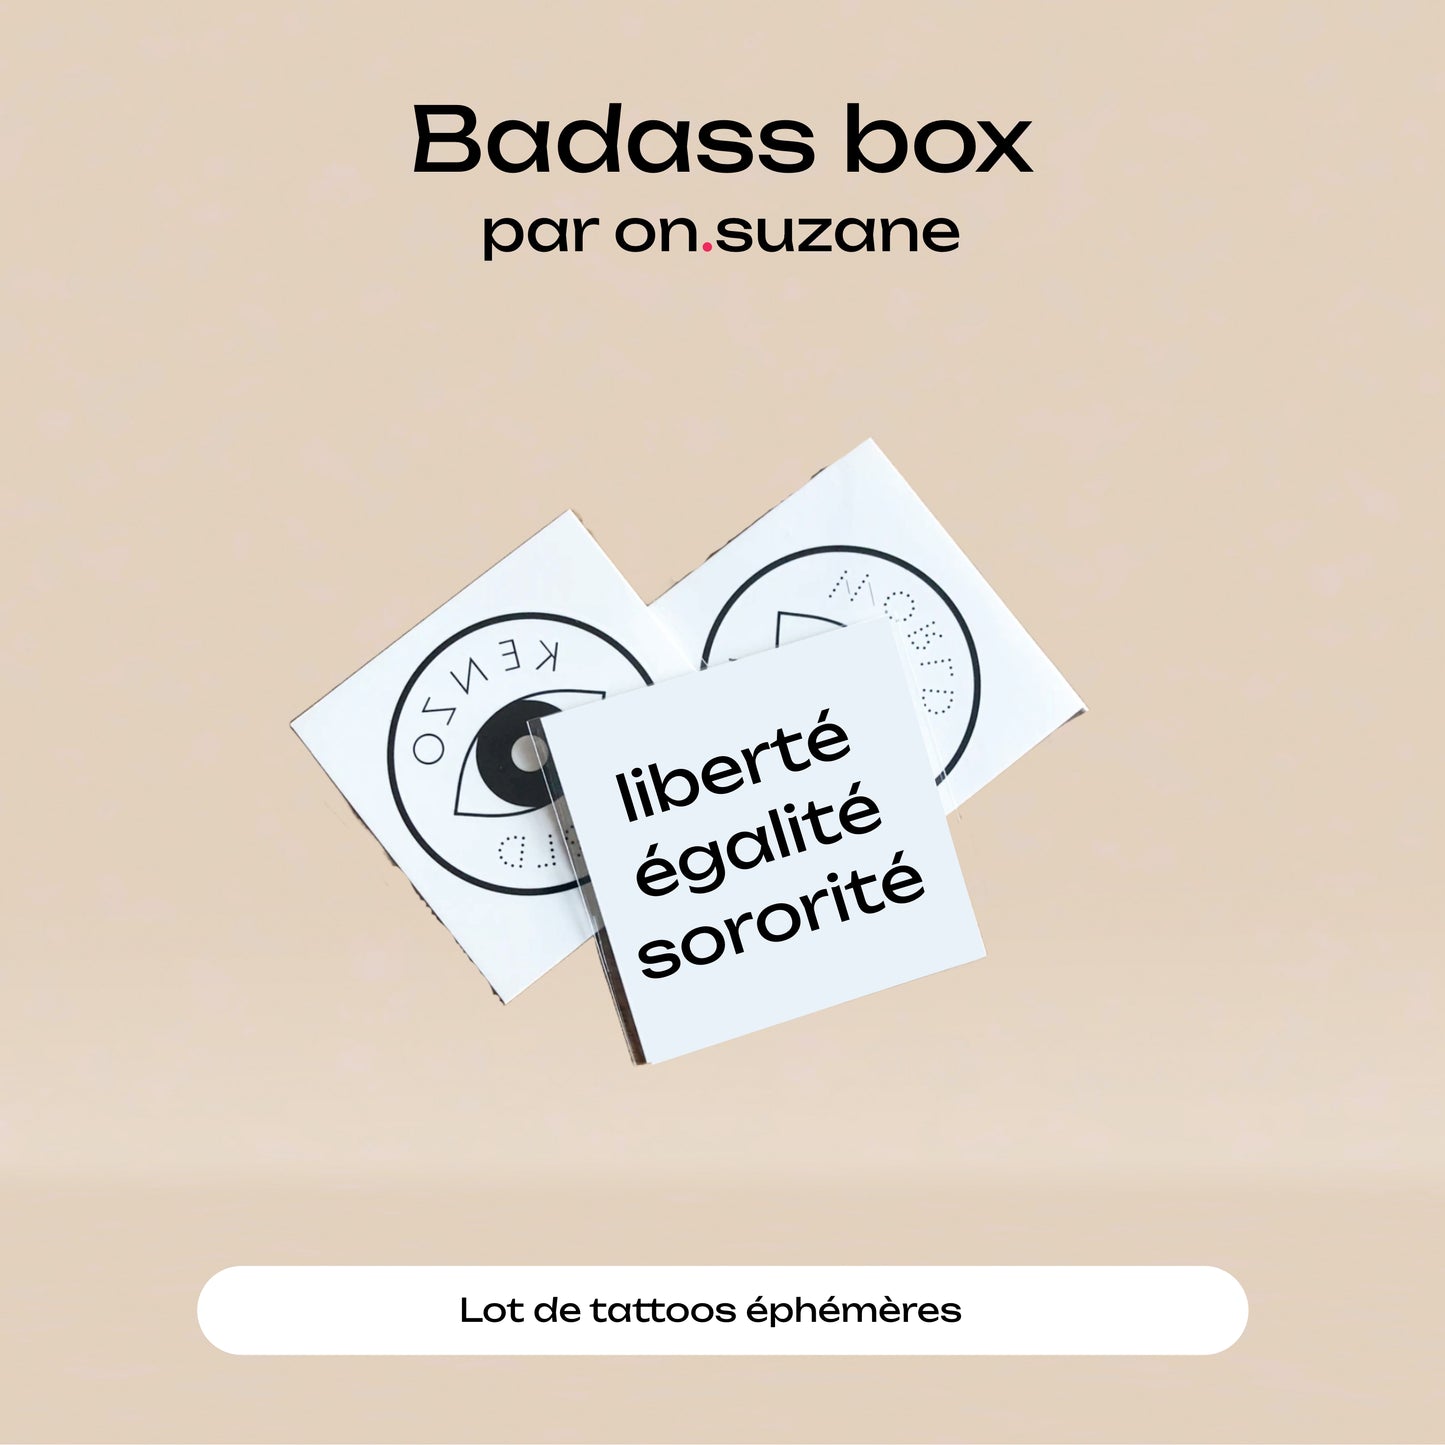 Badass box - Louise